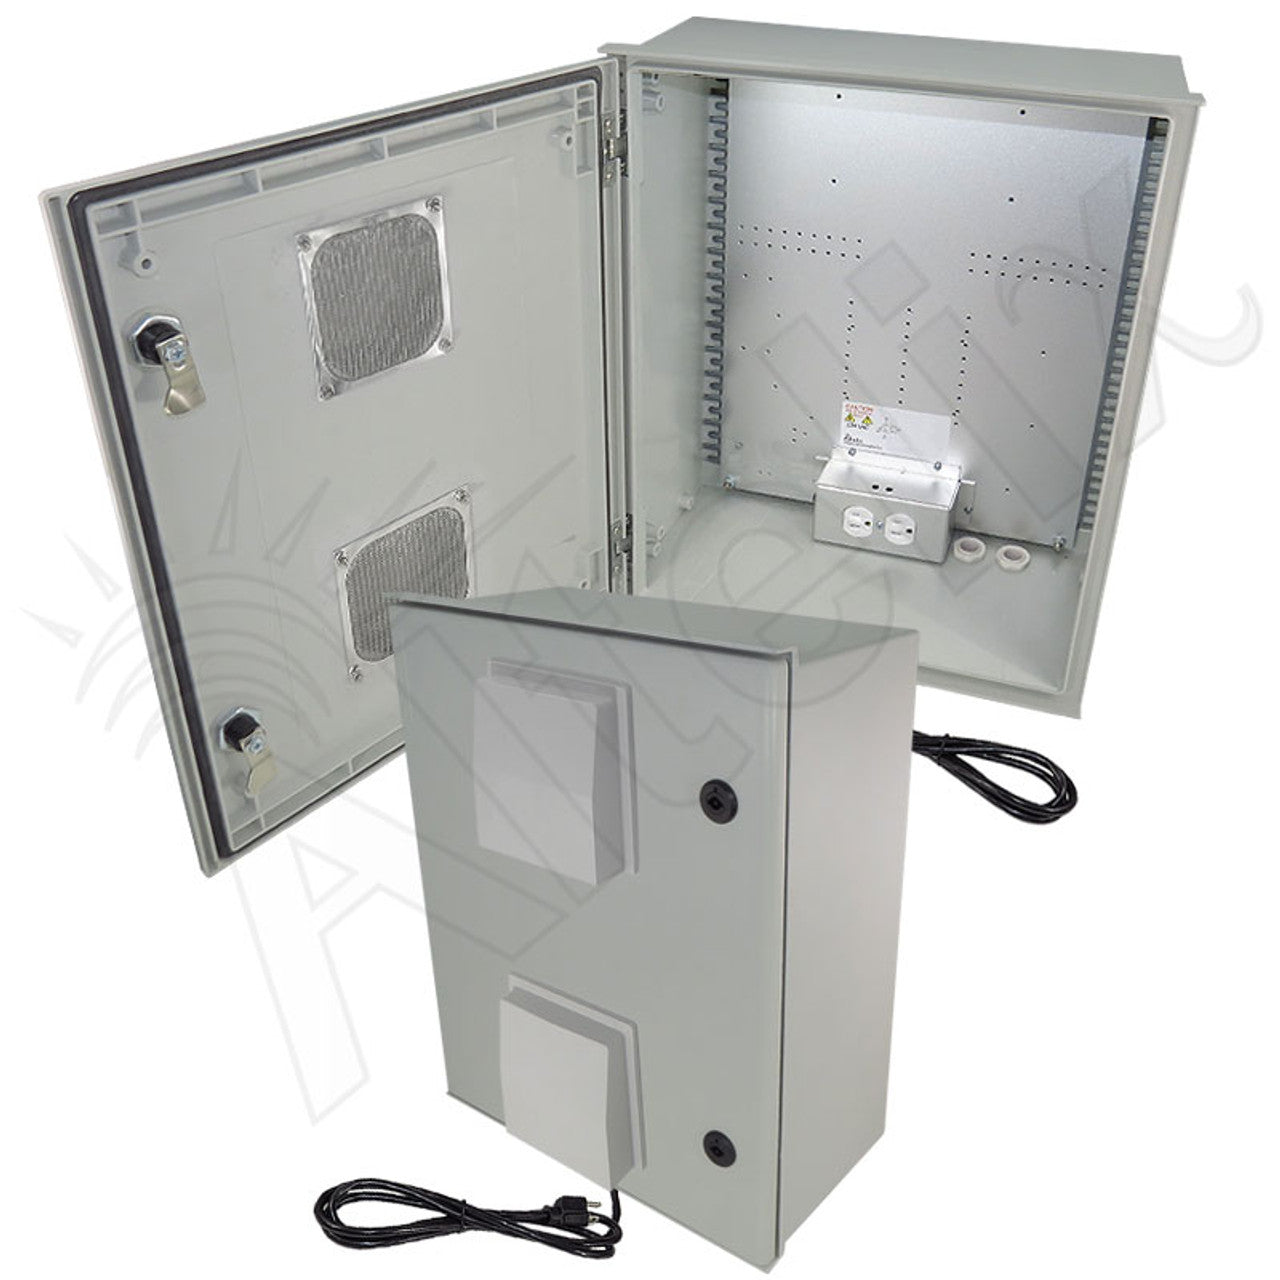 Altelix Vented Fiberglass Weatherproof NEMA Enclosure with Equipment Mounting Plate, 120 VAC Outlets & Power Cord-5